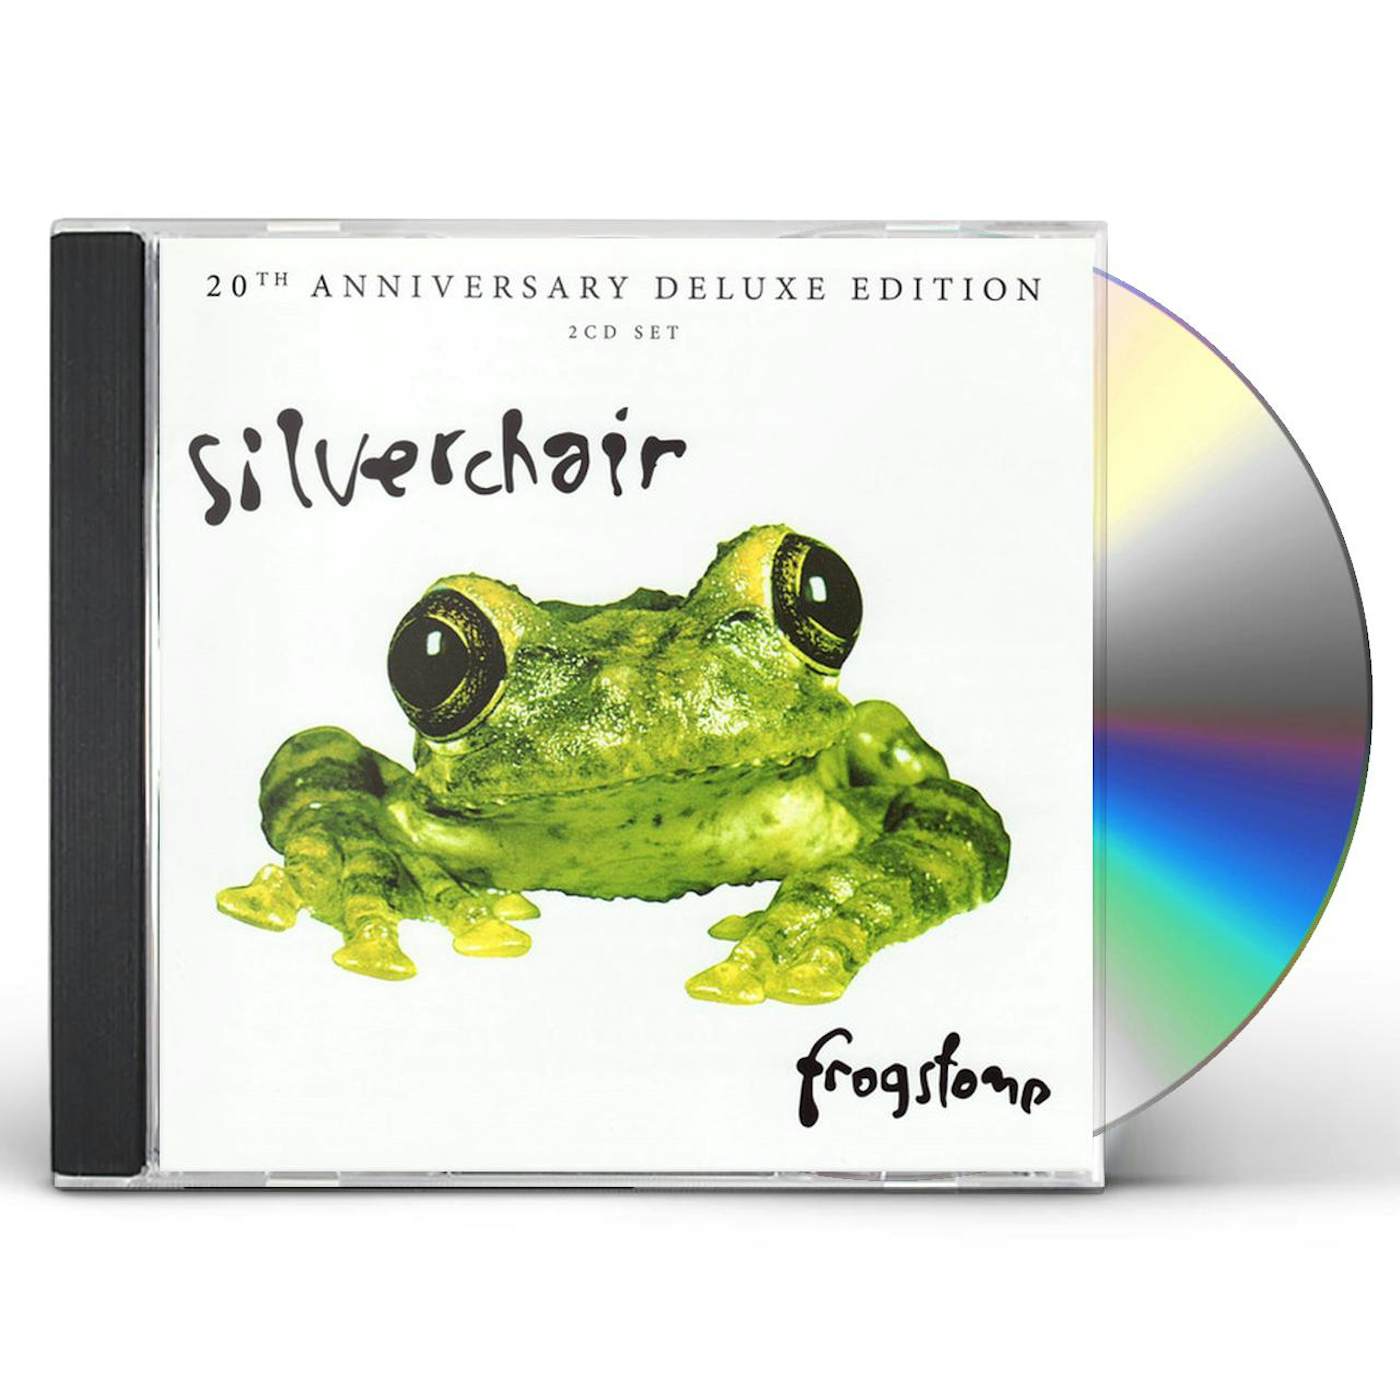 Silverchair FROGSTOMP (20TH ANNIVERSARY) CD